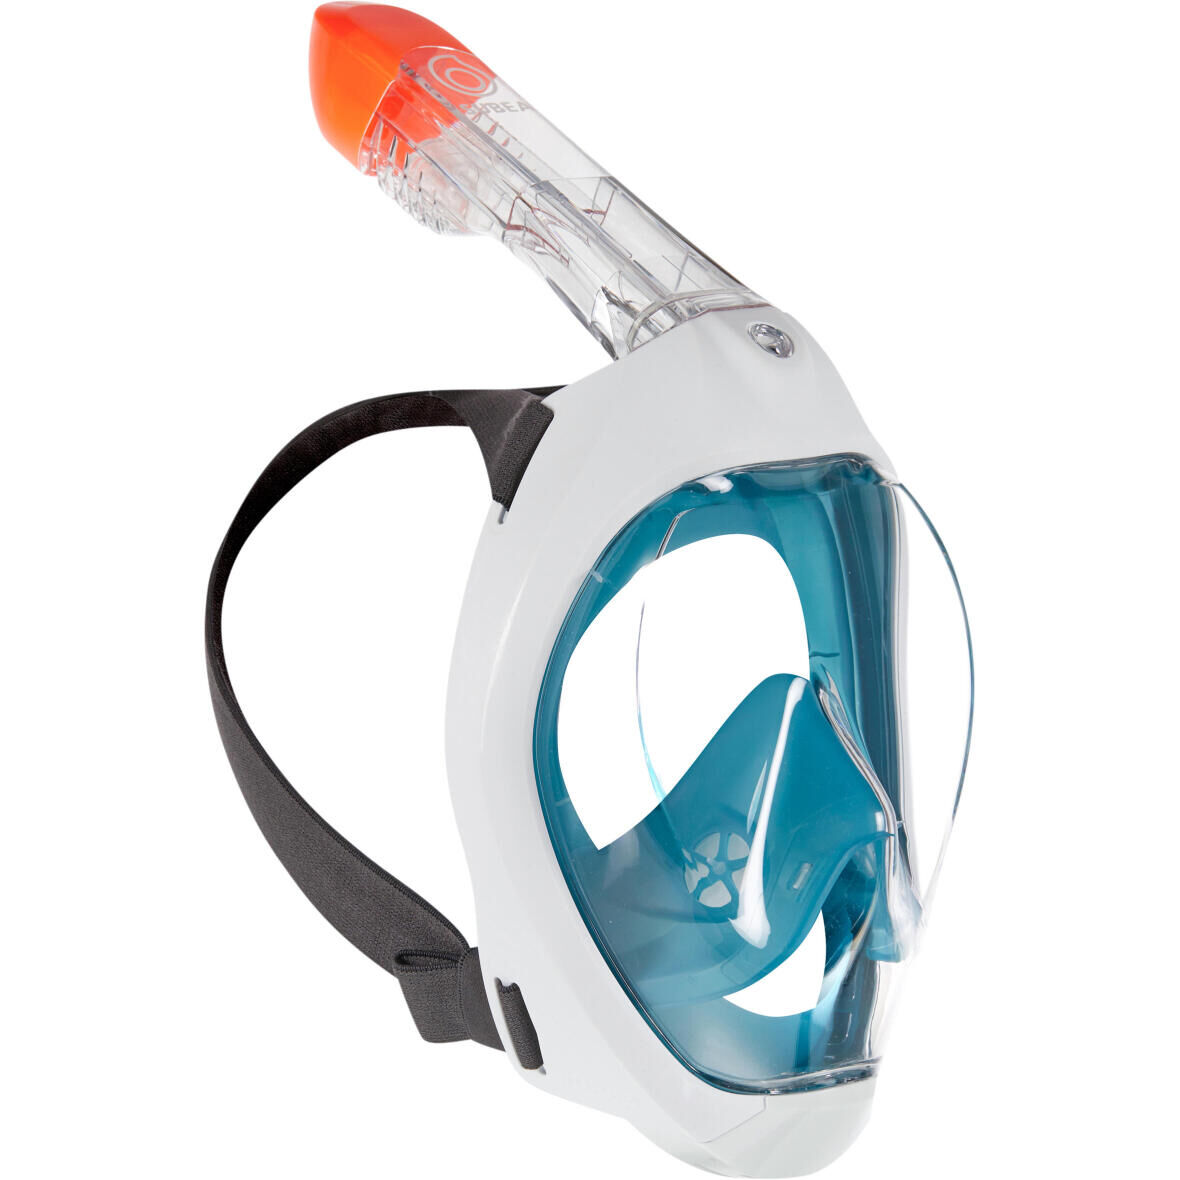 conseil choisir masque snorkeling easybreath subea 